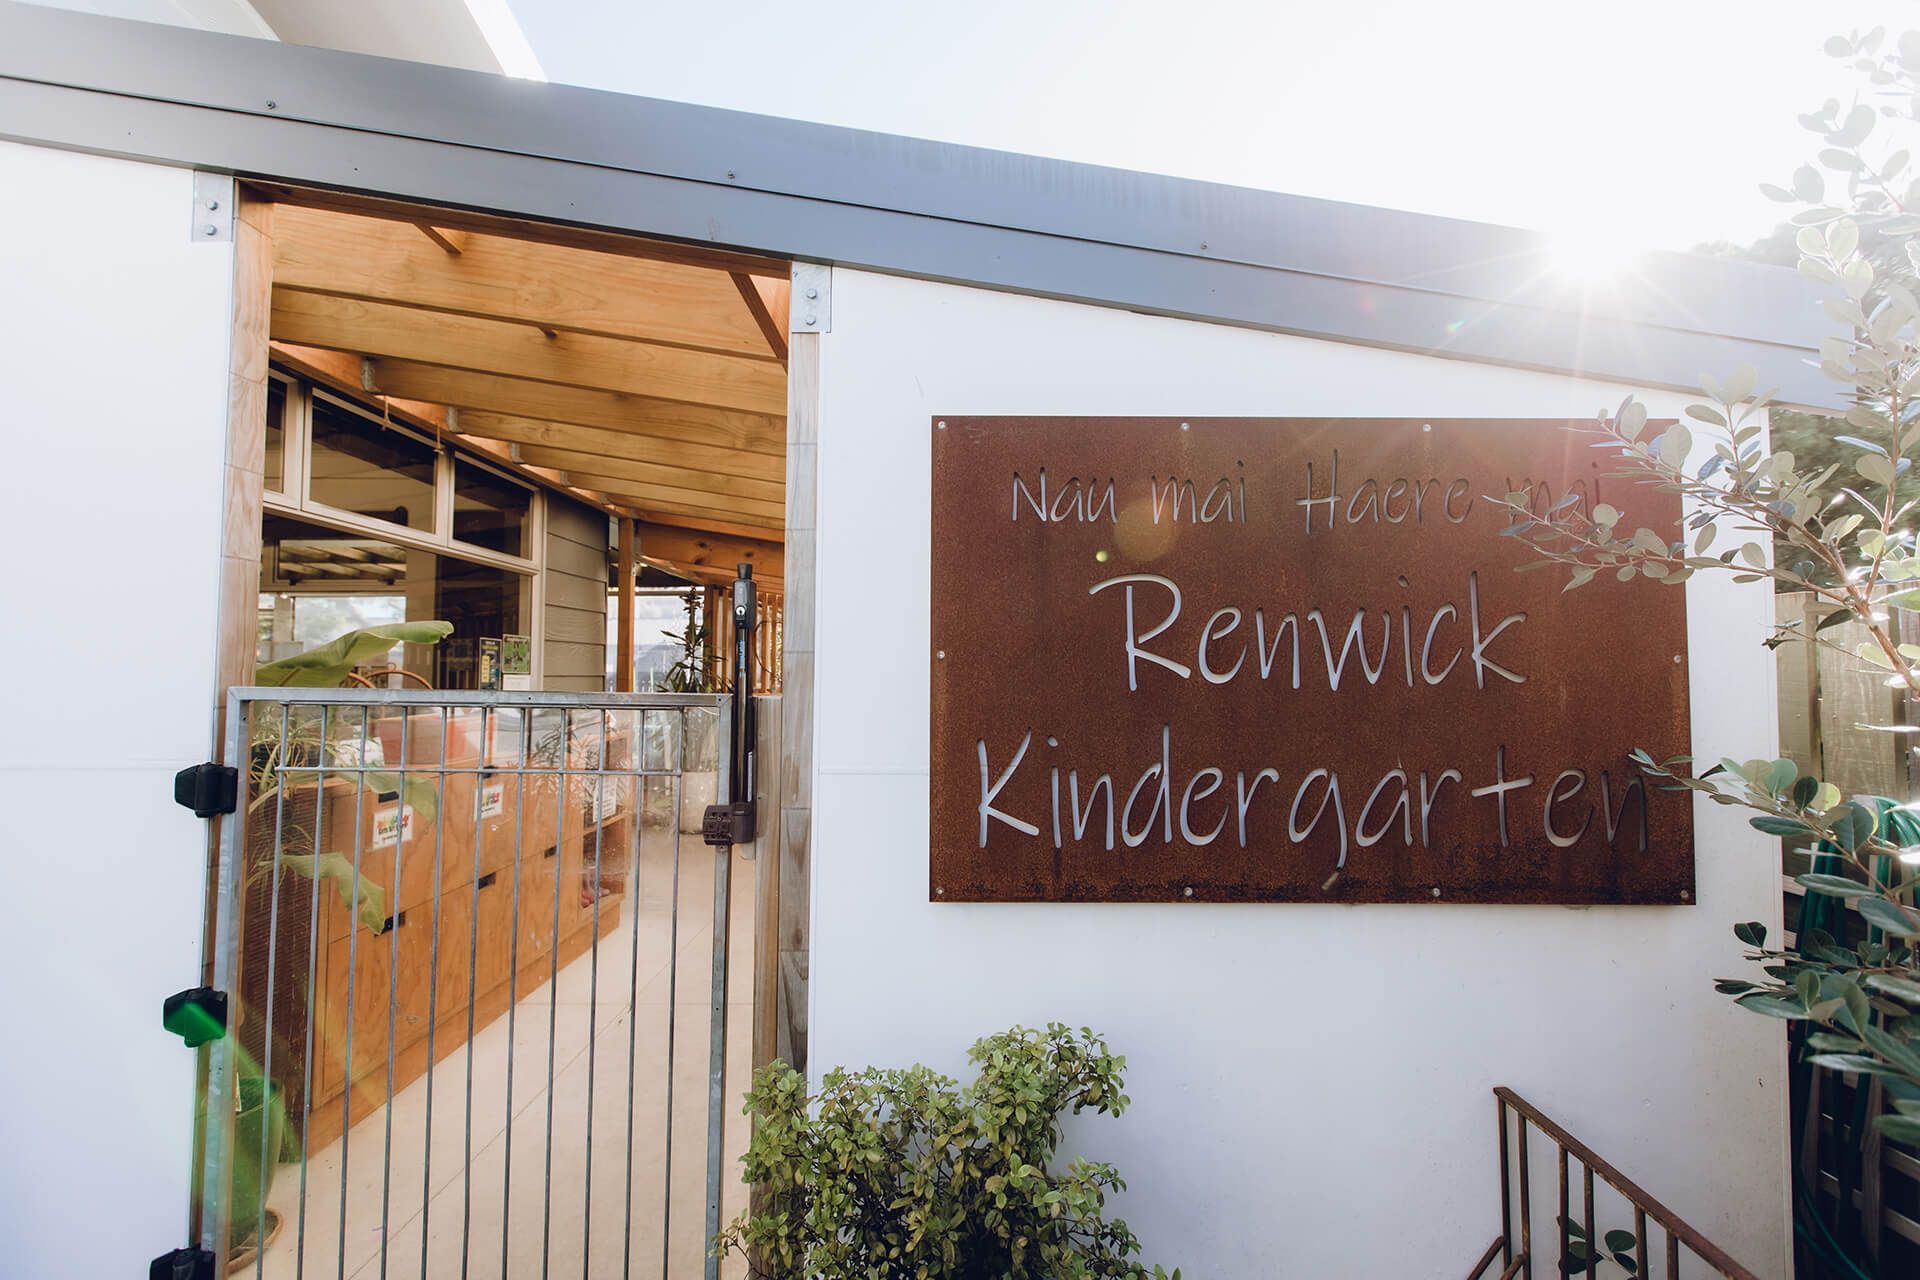 Renwick Kindergarten in Marlborough, New Zealand